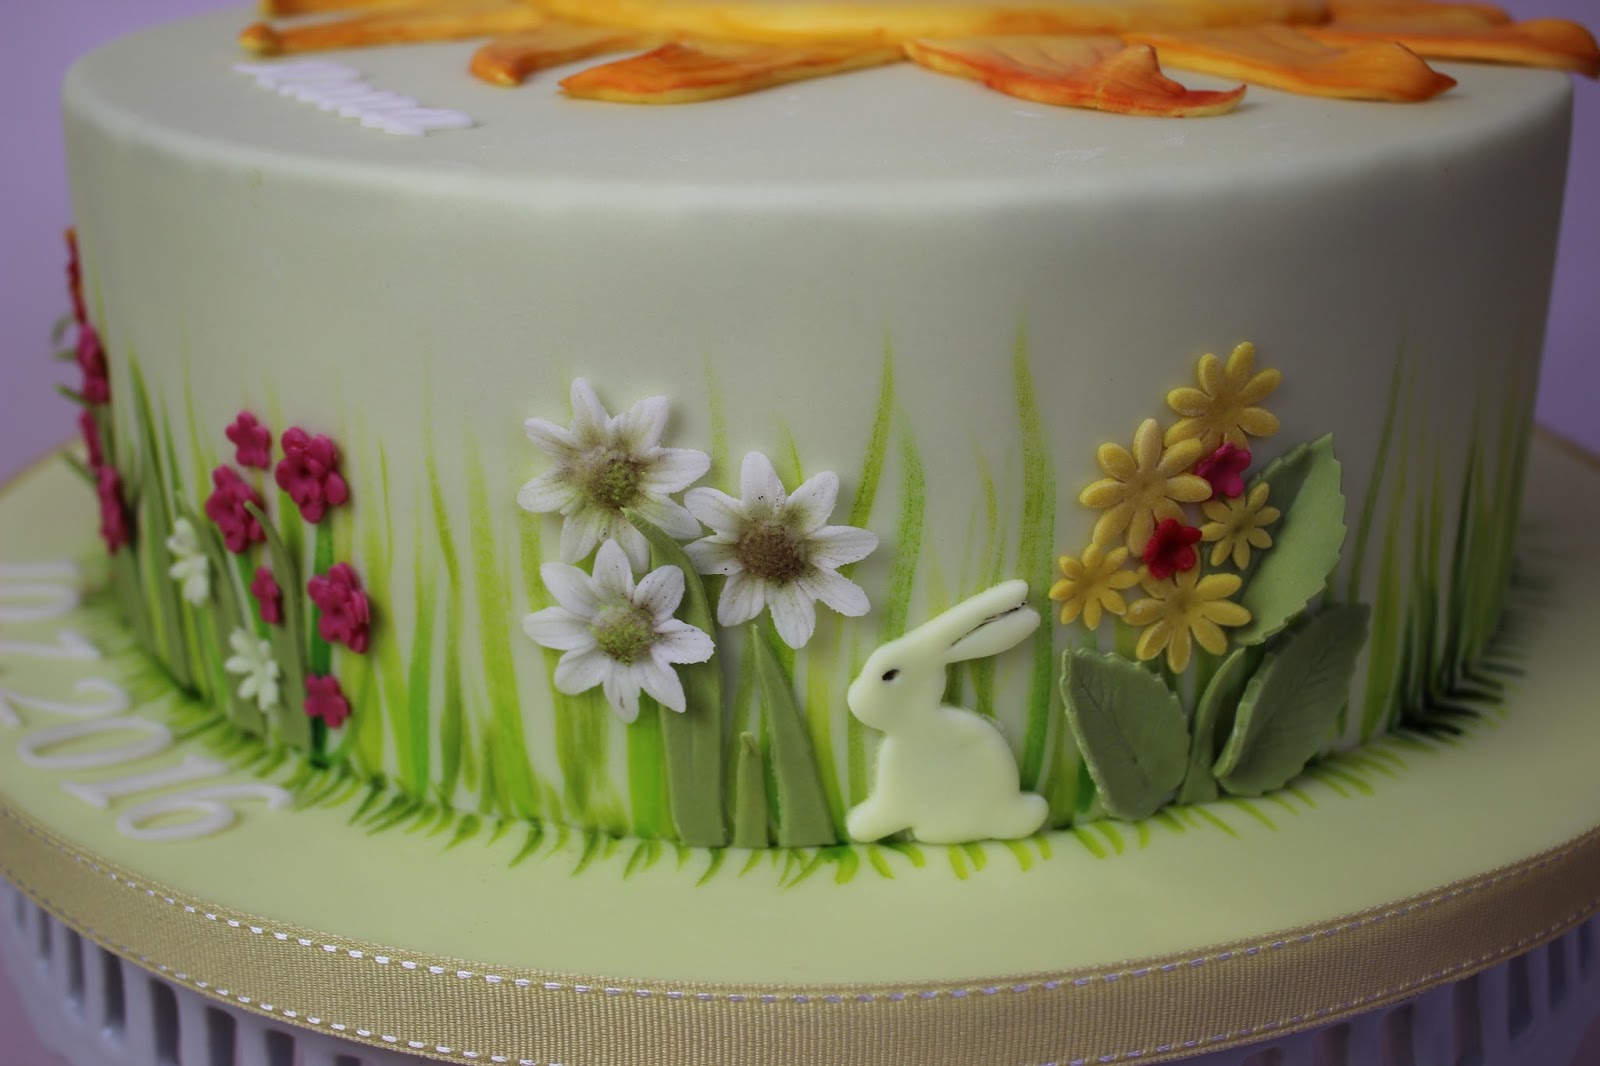 Louis Vuitton cake - Decorated Cake by Brigittes - CakesDecor